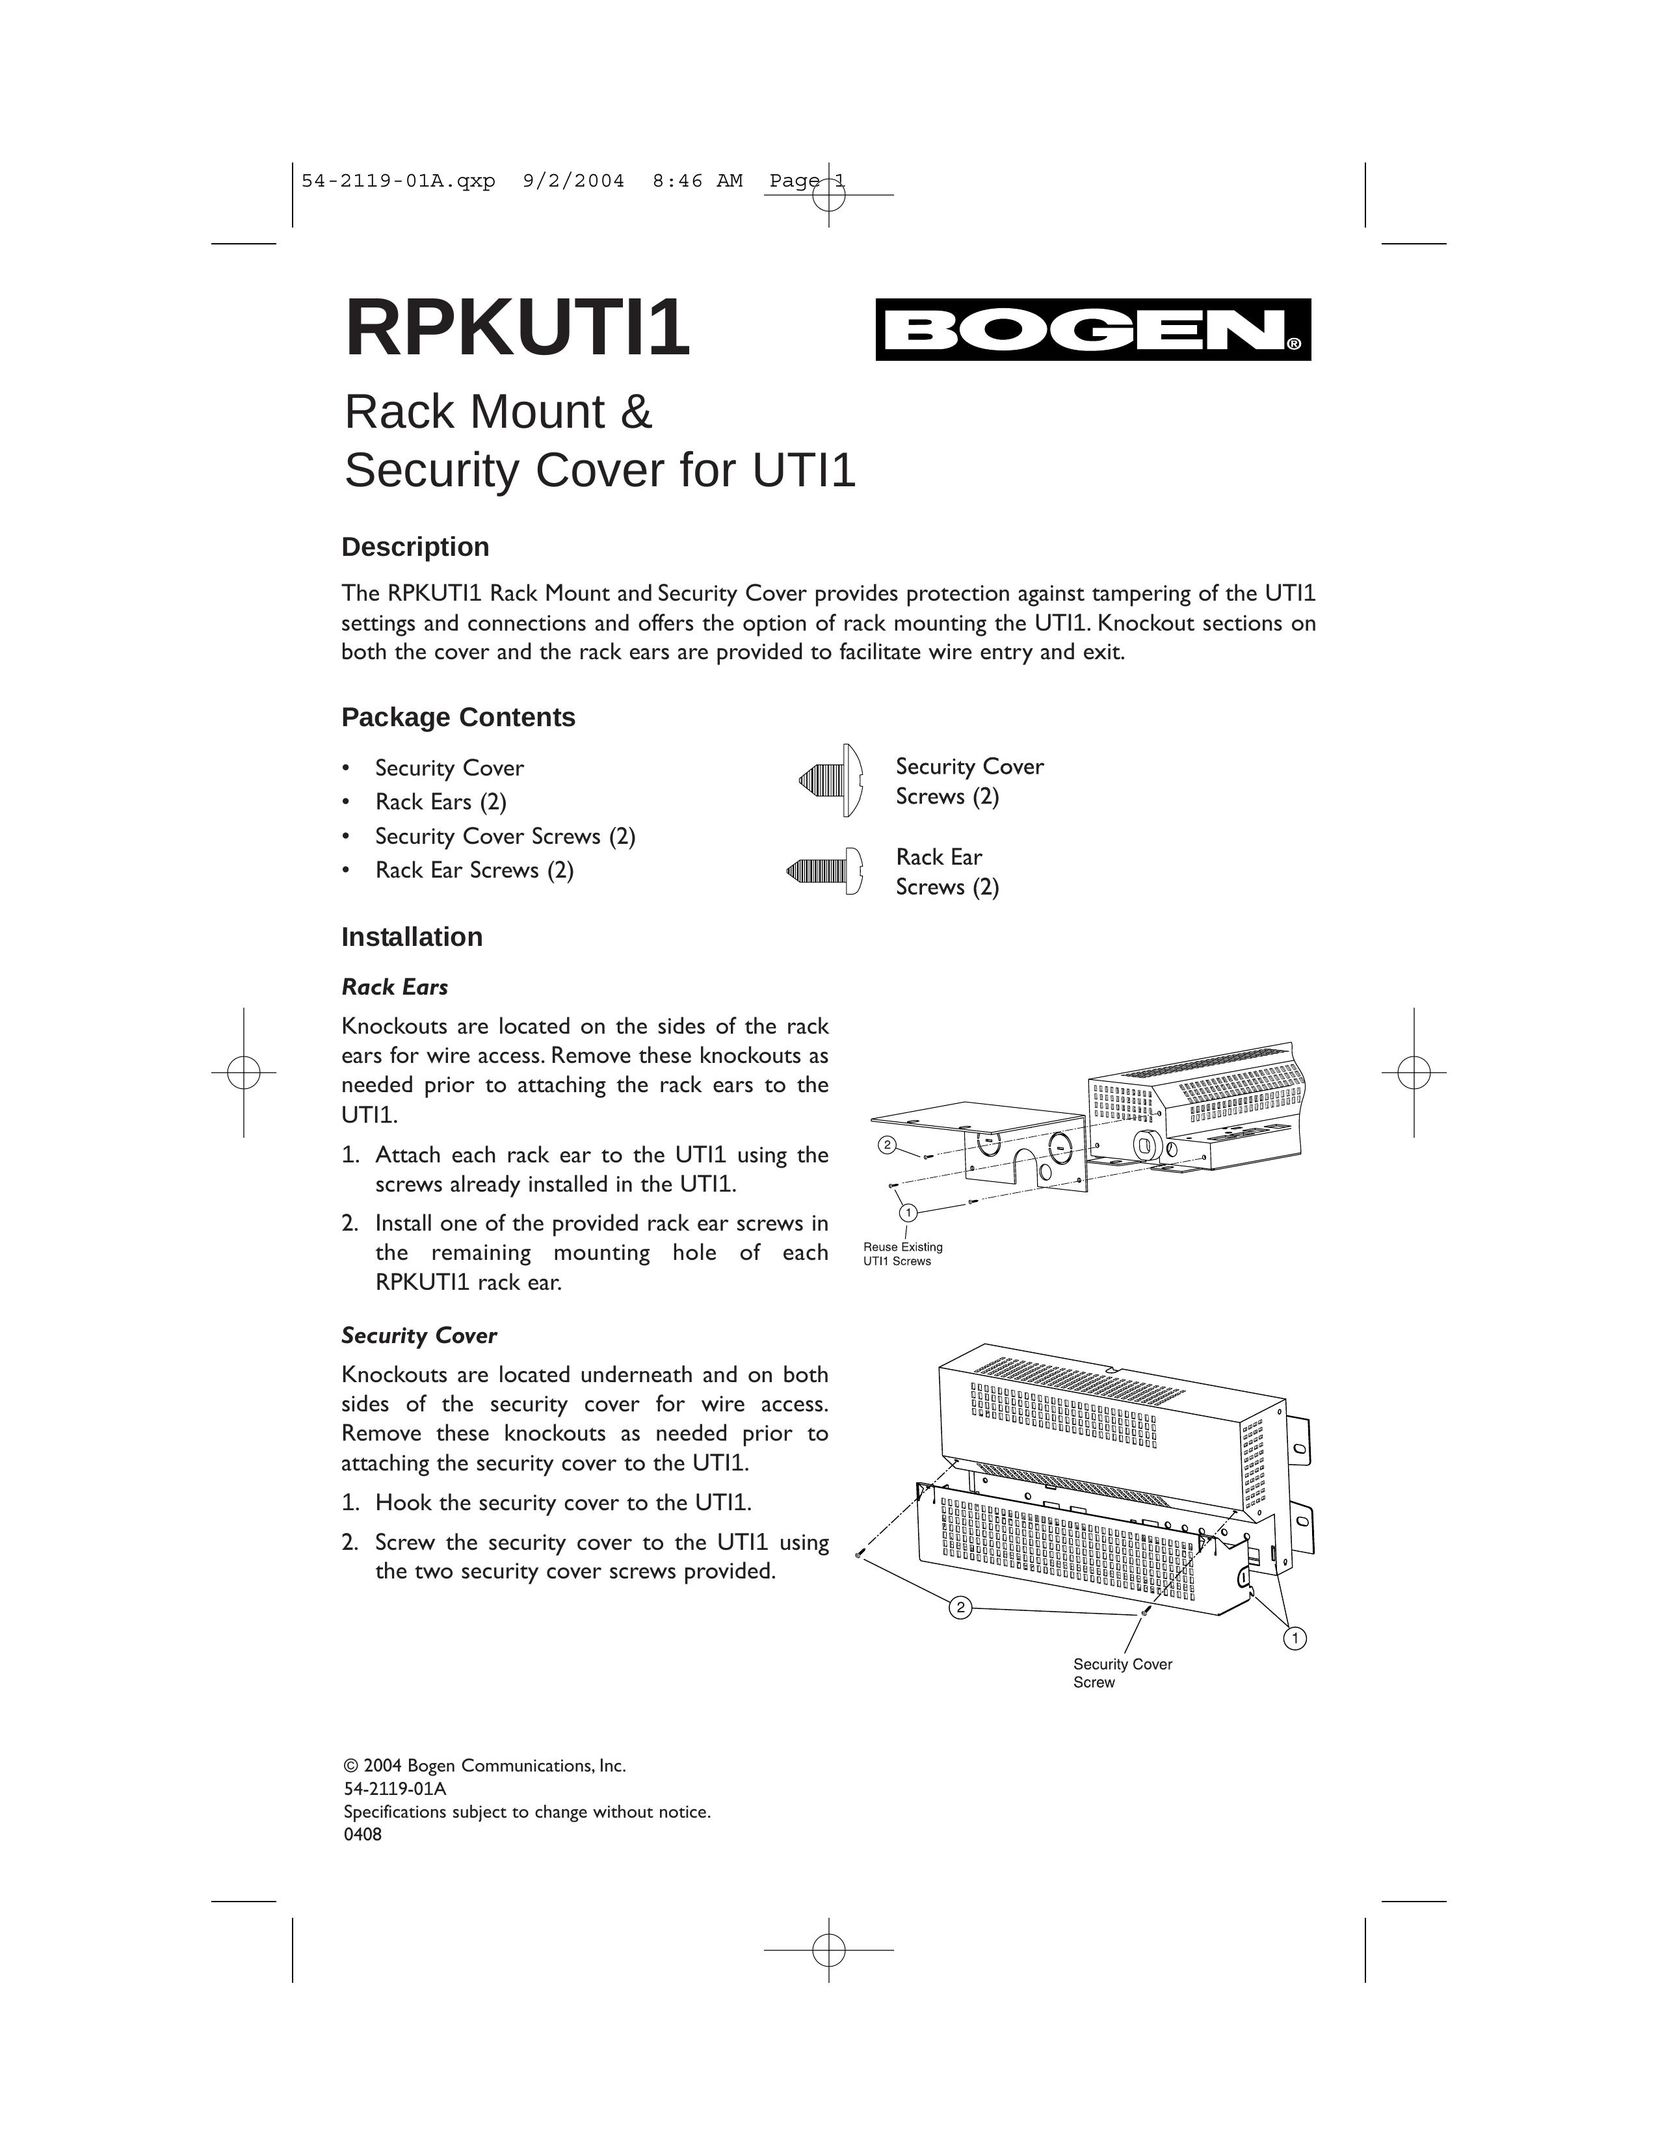 Bogen RPKUTI1 Network Router User Manual